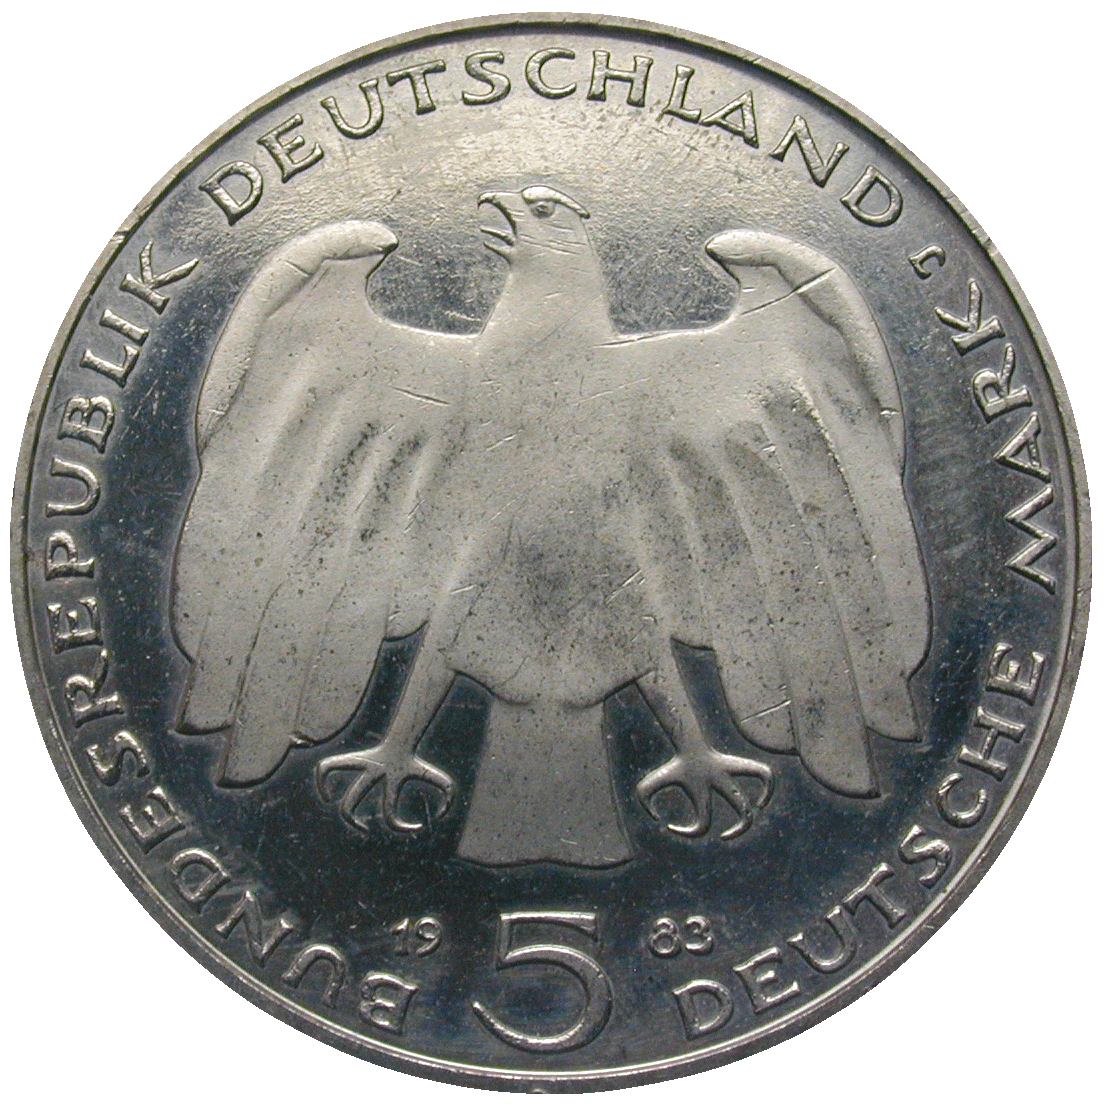 Federal Republic of Germany, 5 Deutsche Mark 1983 (obverse)